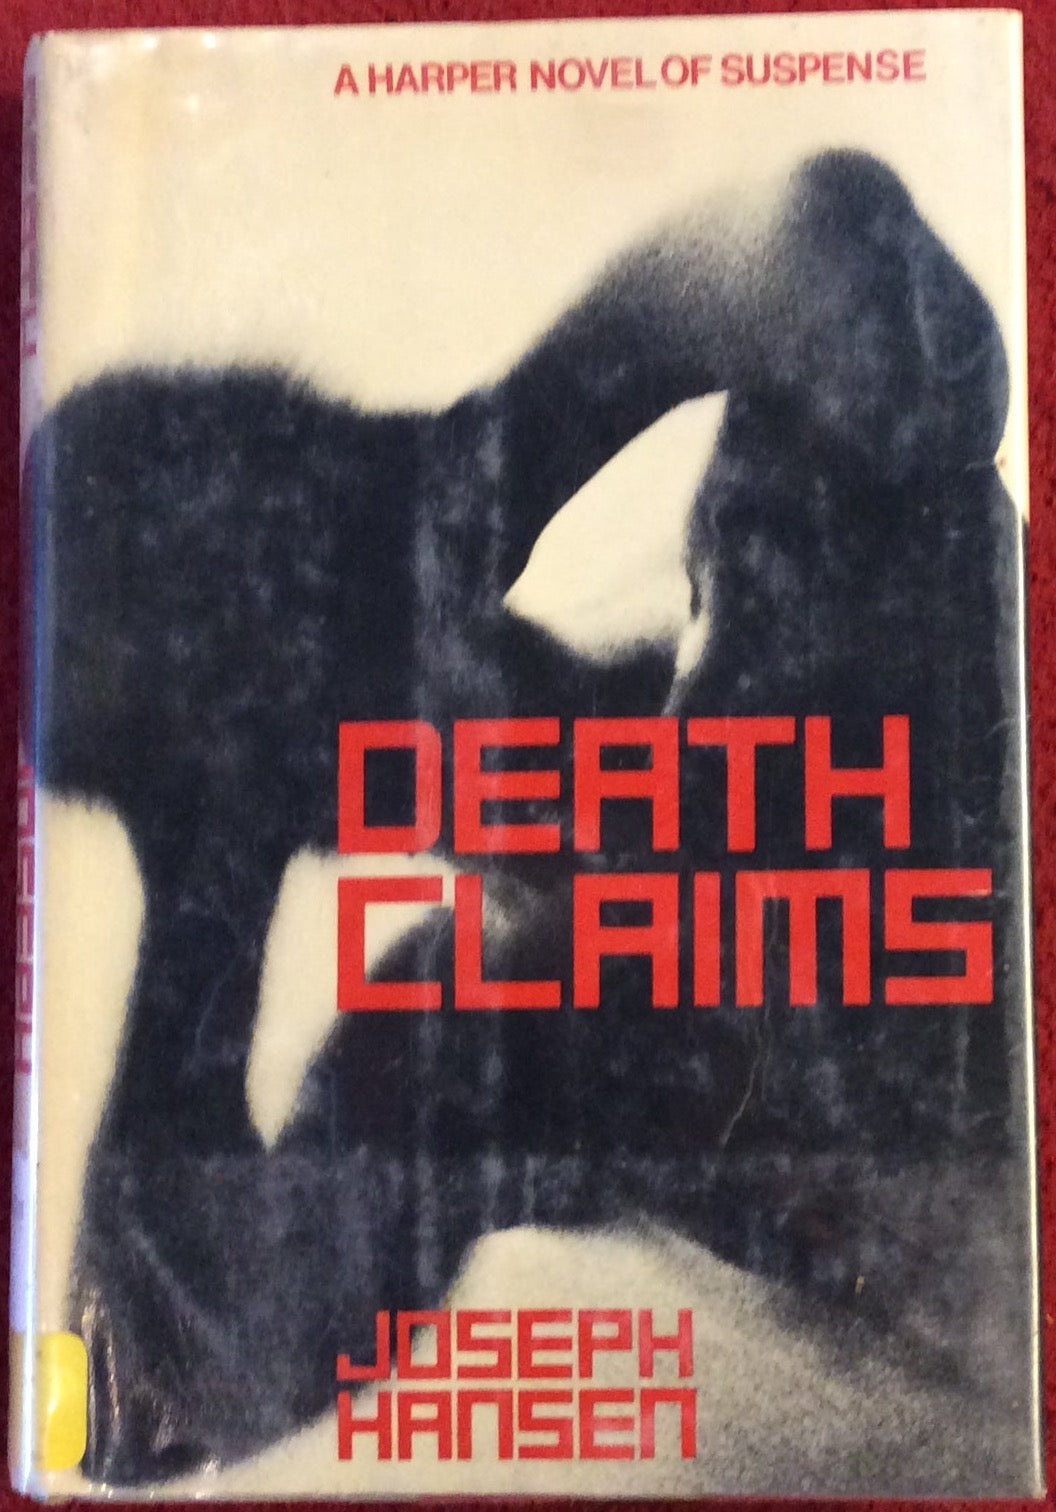 Death Claims, Joseph Hansen, 1973, Harper & Row *